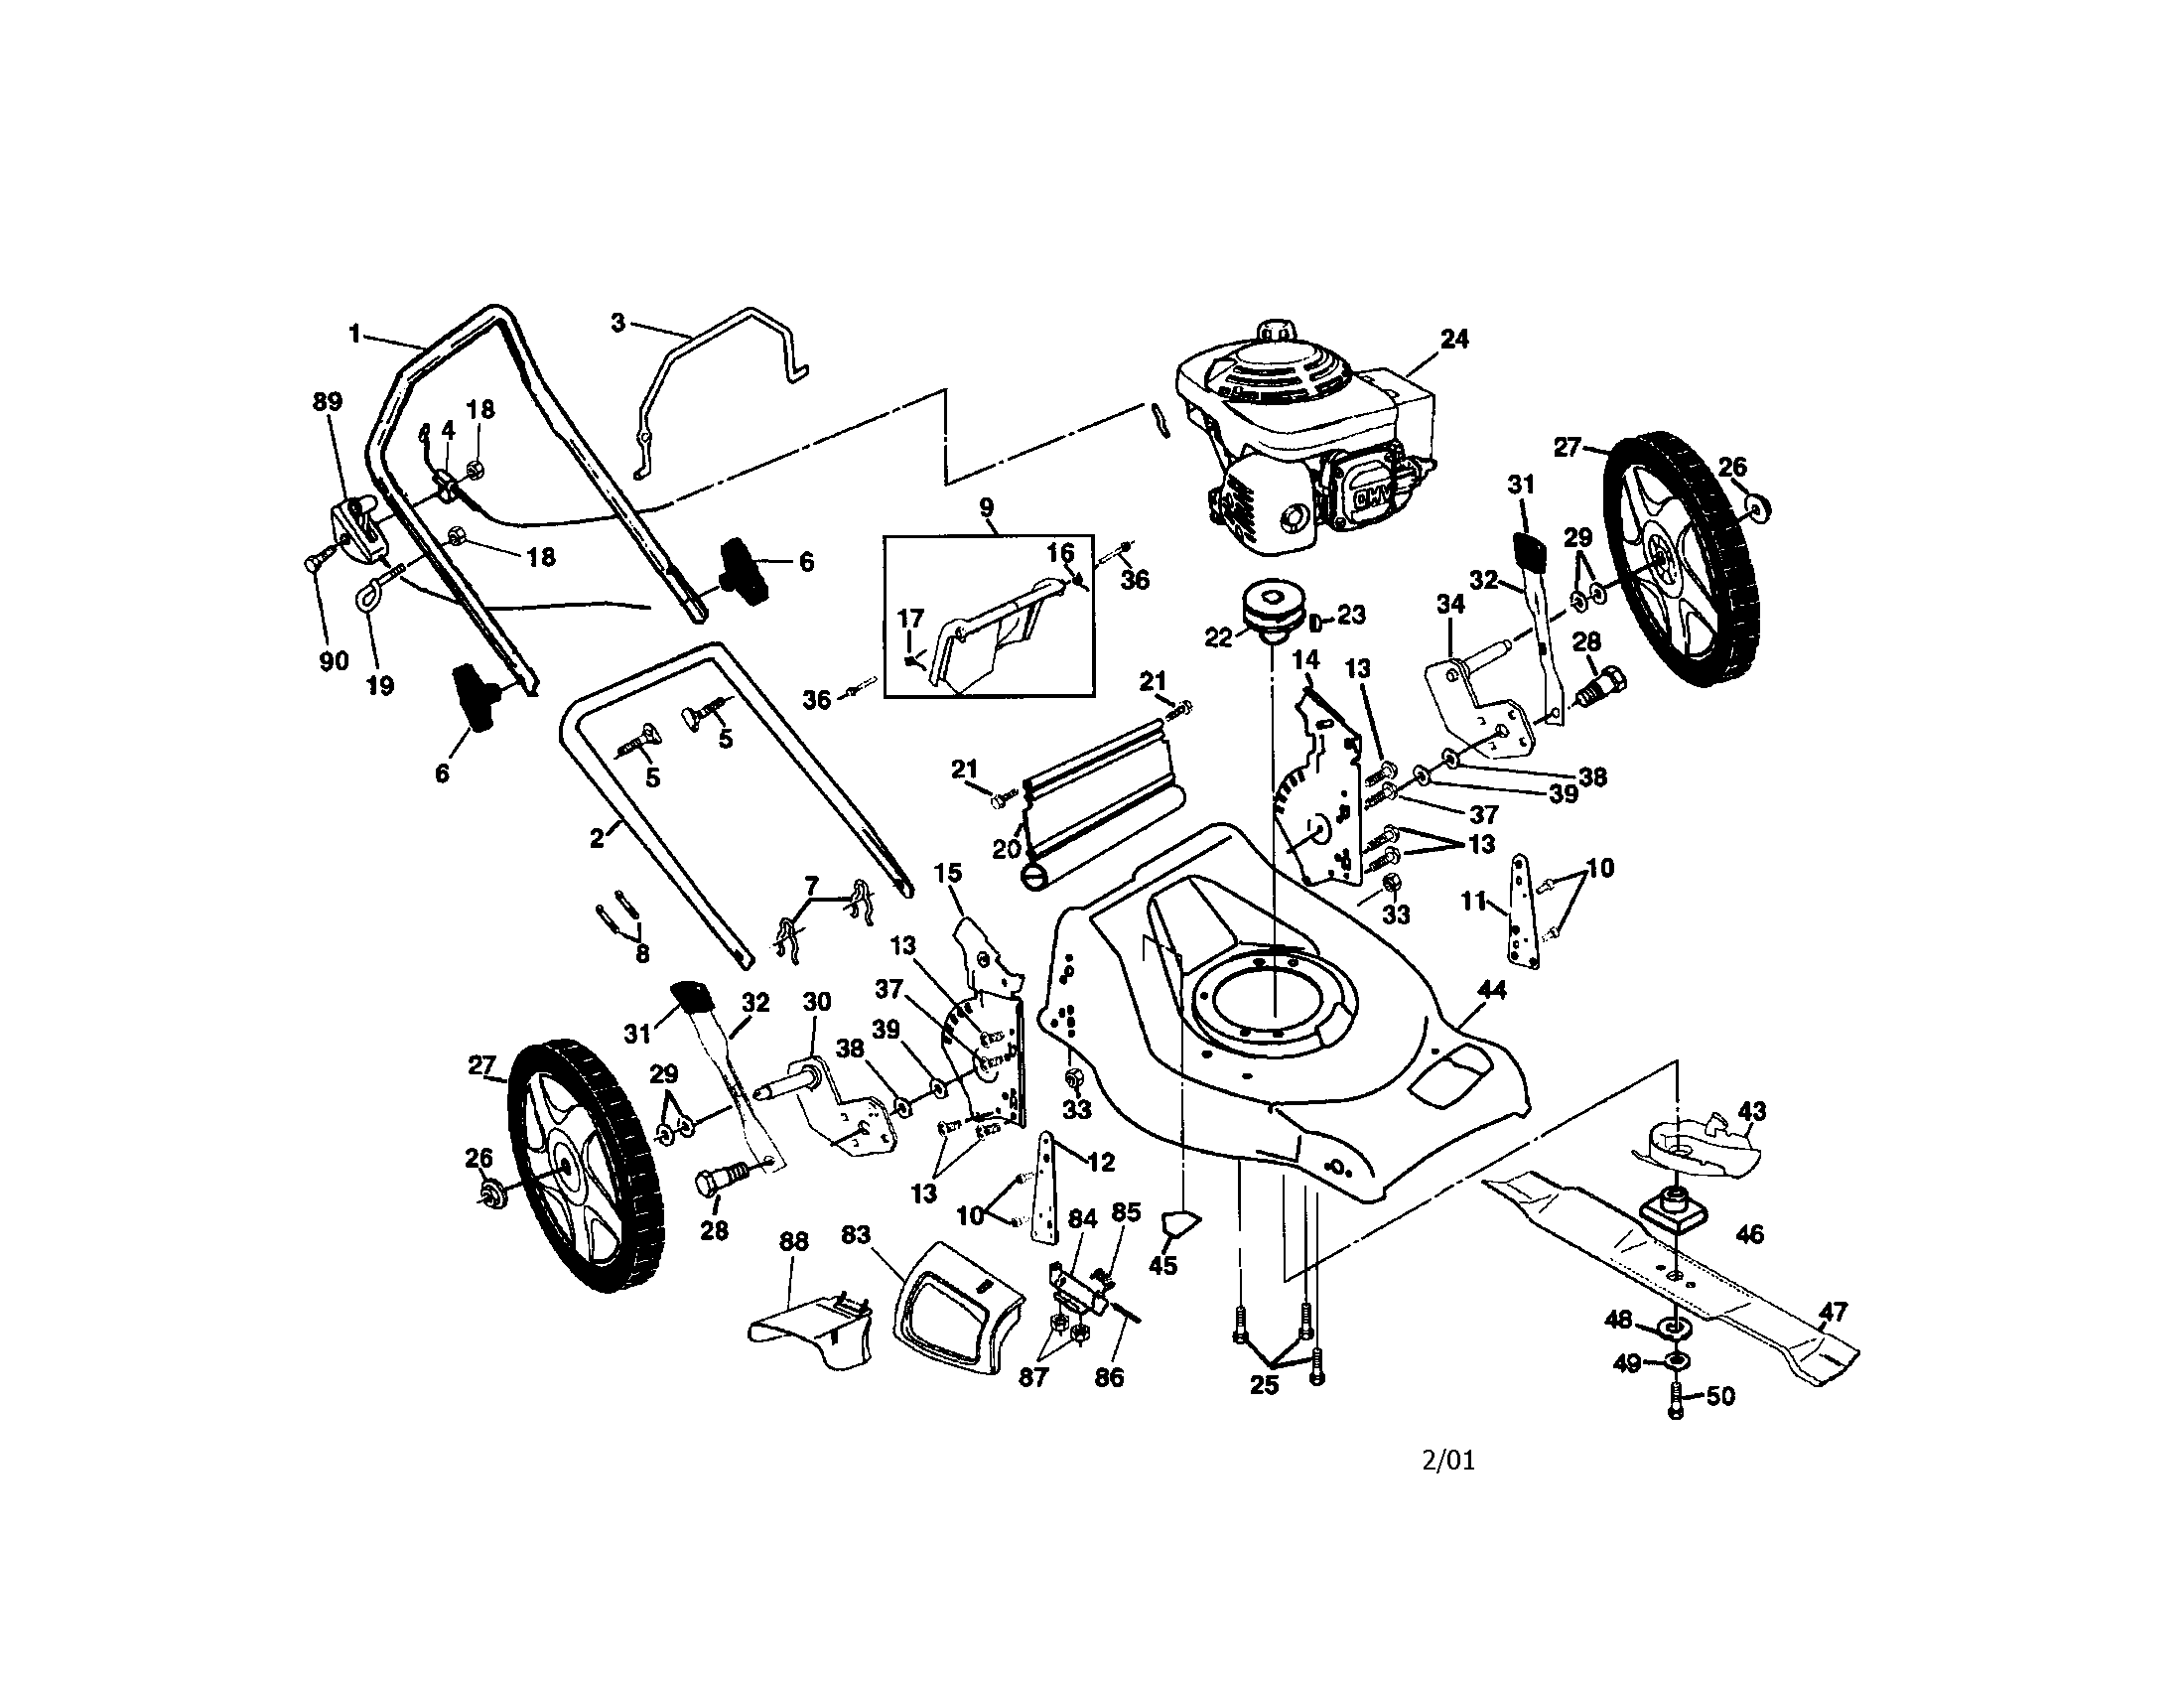 Honda mower repair schematic #3